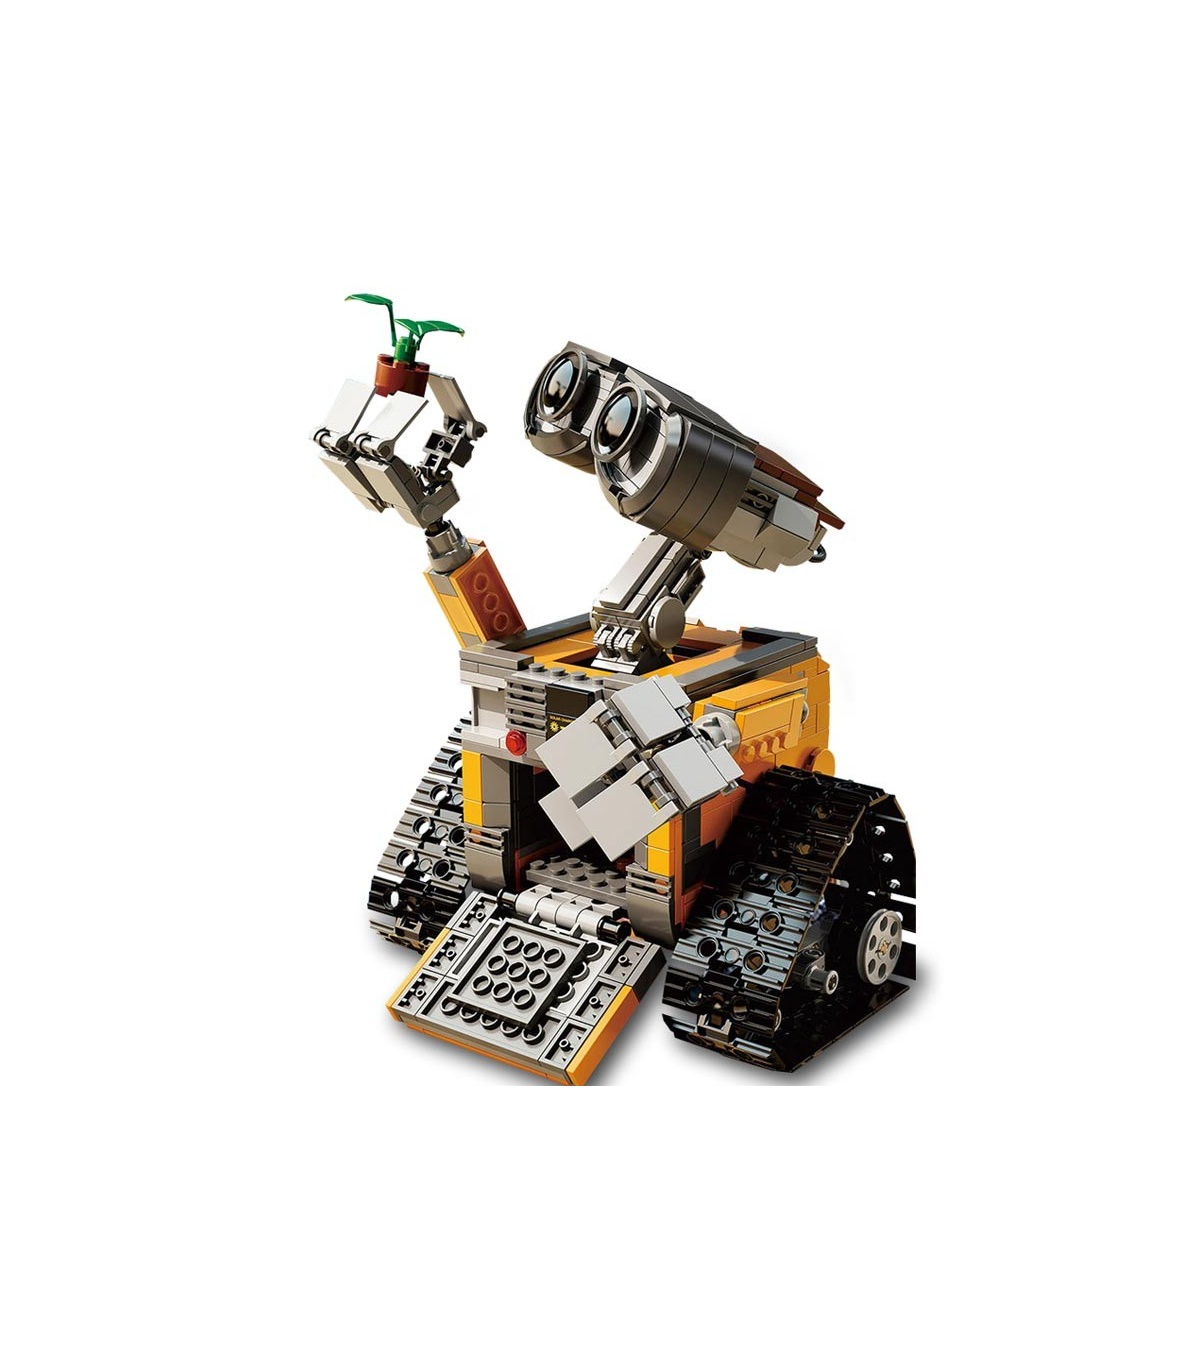 Creator Series Idea Robot Wall E Compatible Montado Buildi 